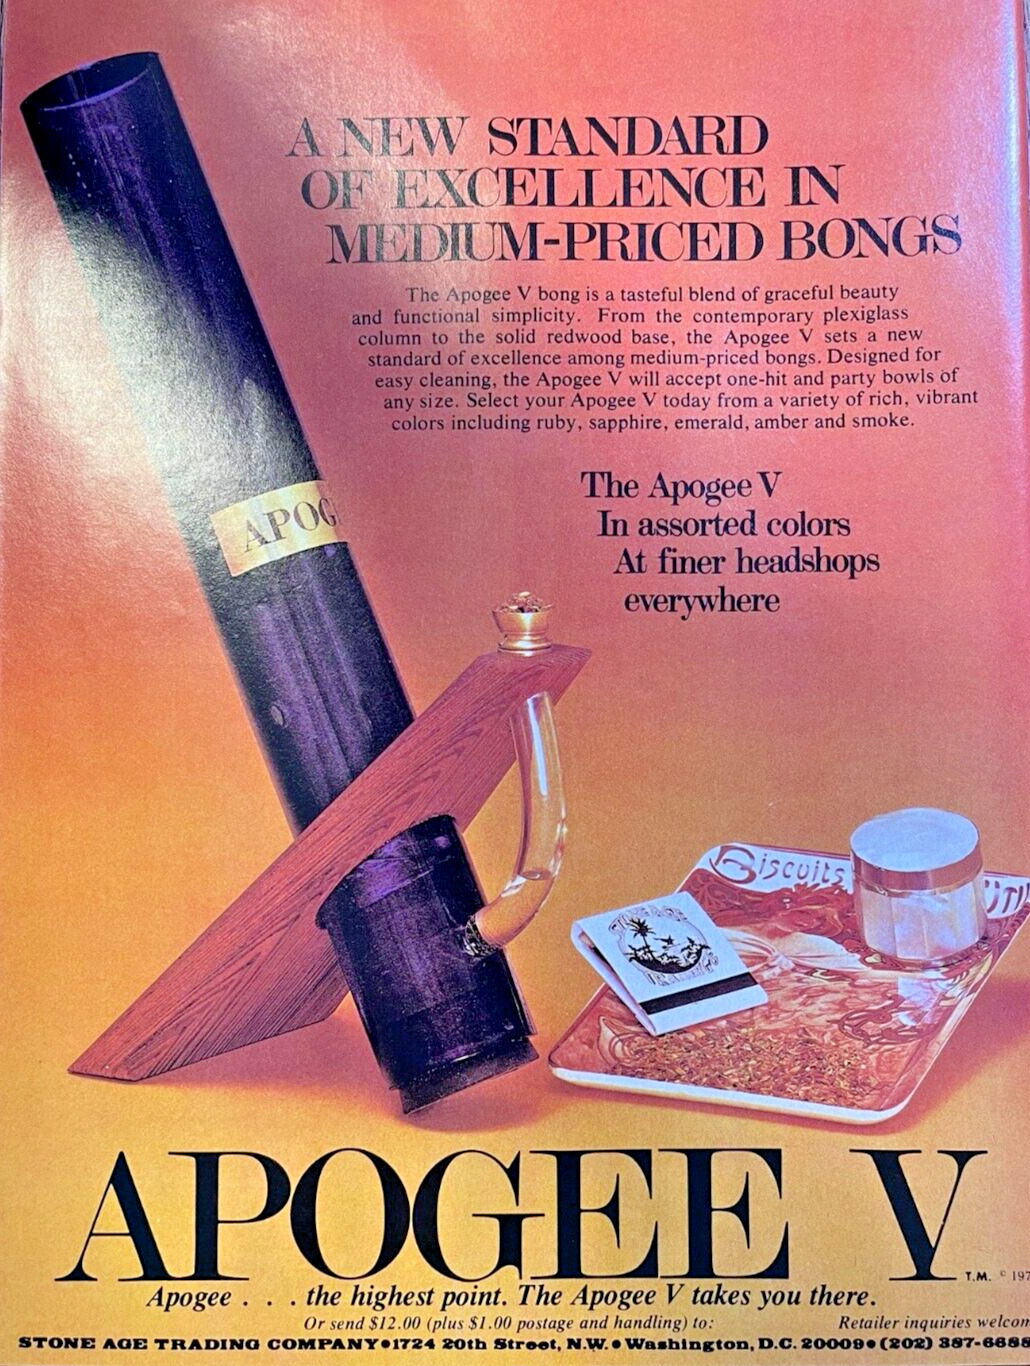 1978 Vintage Magazine AdvertisementApogee V Medium Priced Bongs